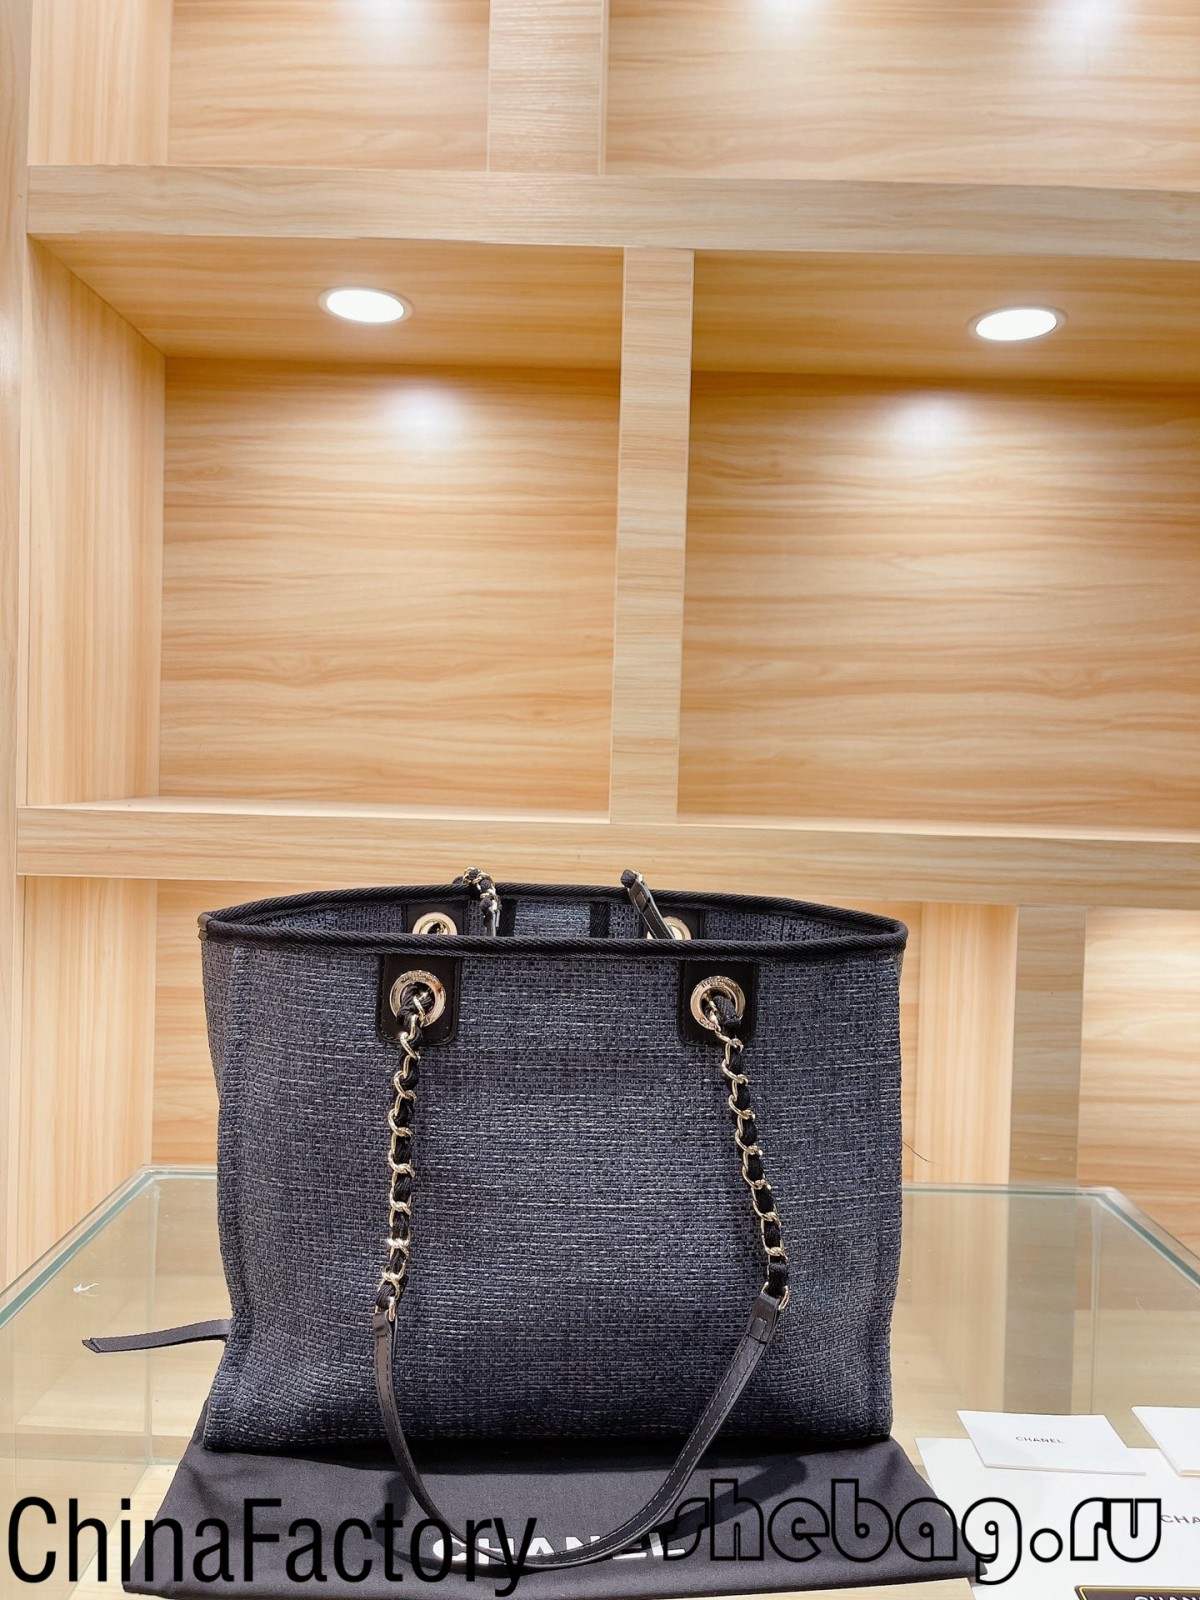 Chanel Deauville Canvas Tote sak replika groothandel verkoper aanbeveling (2022 warmste)-beste kwaliteit vals Louis Vuitton sak aanlyn winkel, replika ontwerper sak ru